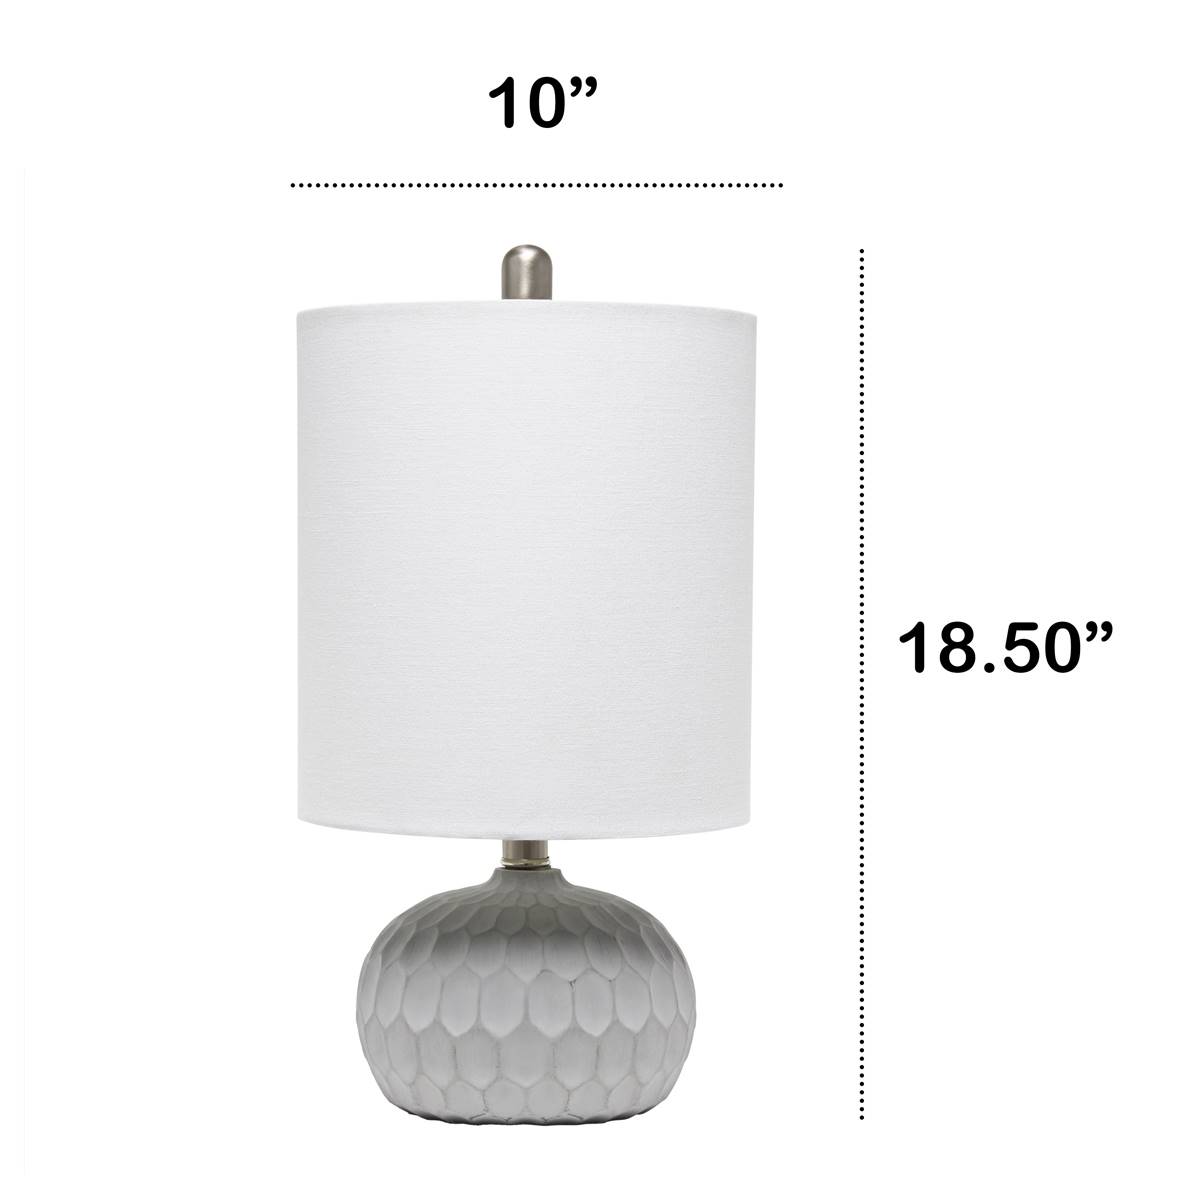 Lalia Home Organix Concrete Thumbprint Table Lamp W/Fabric Shade